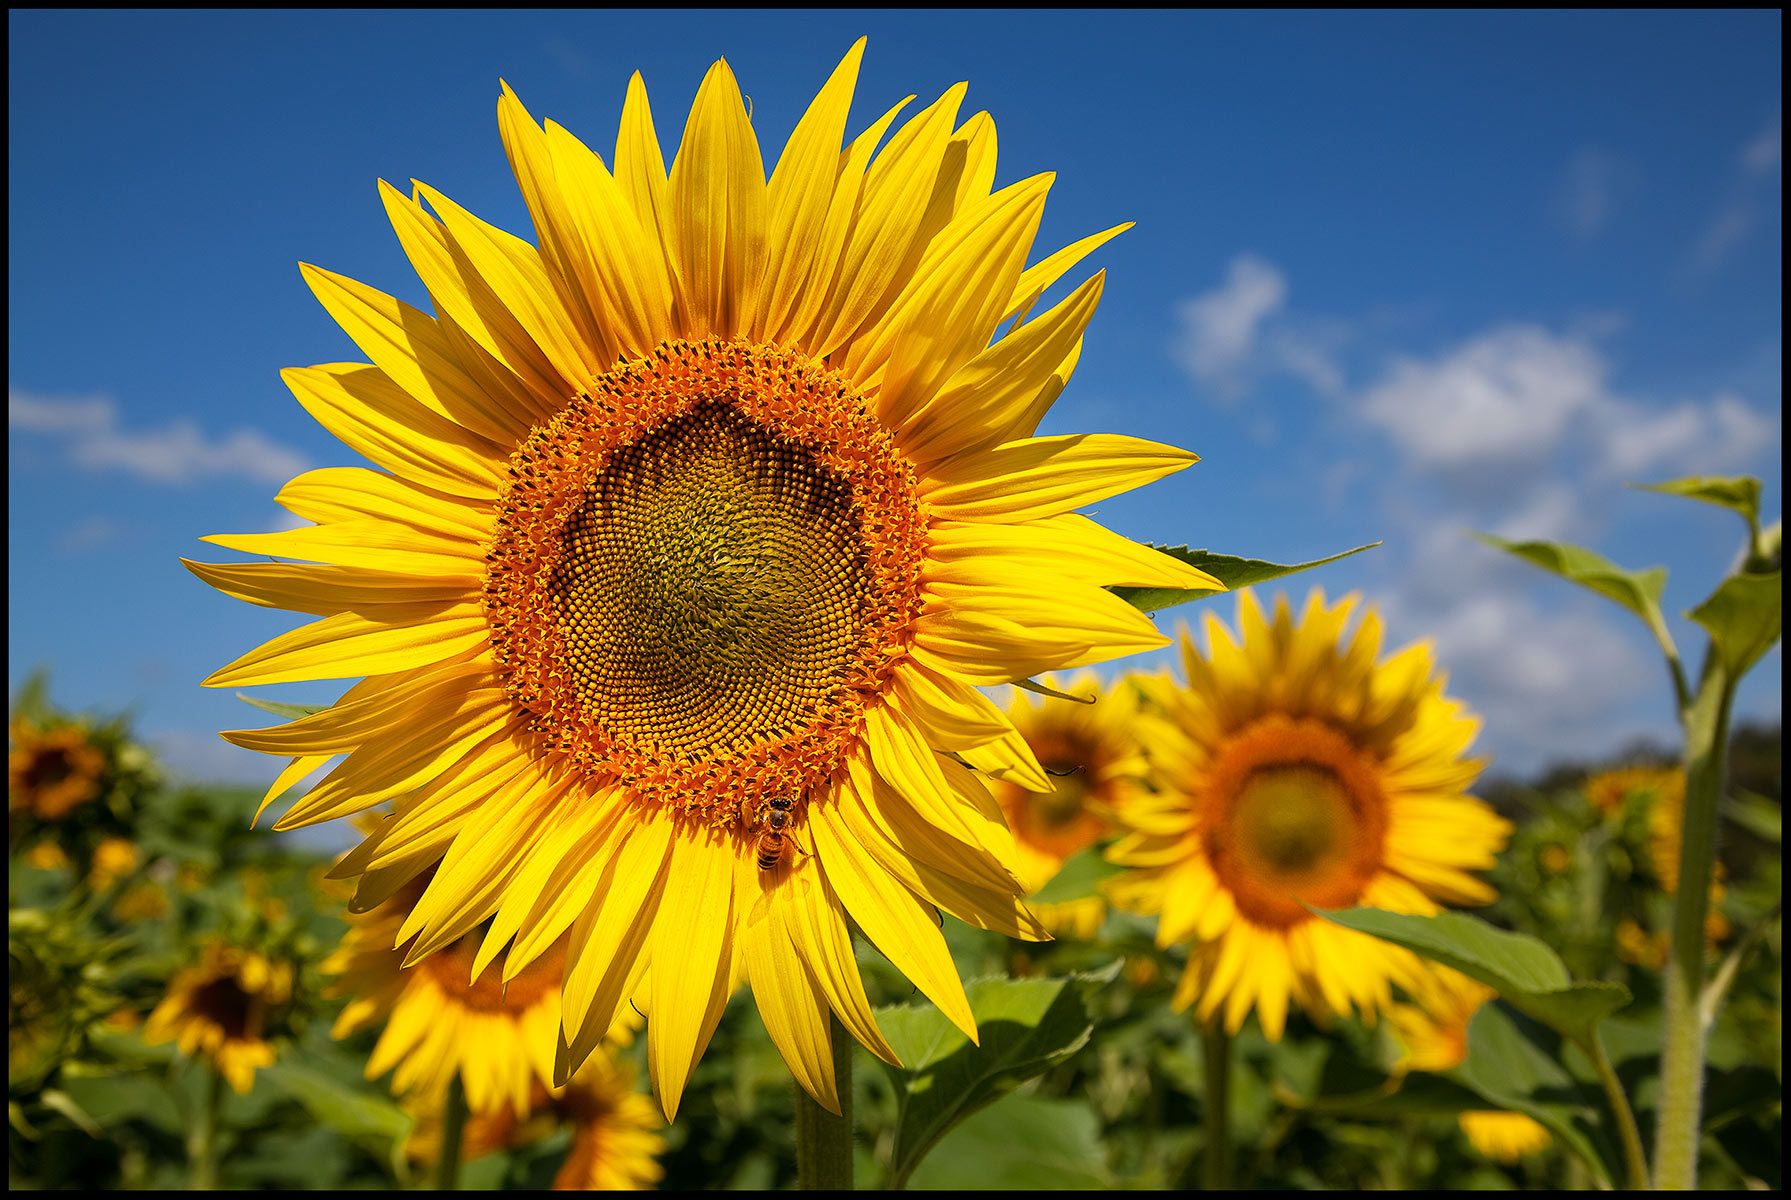 1090709_sunflowers_007_8bitweb.jpg